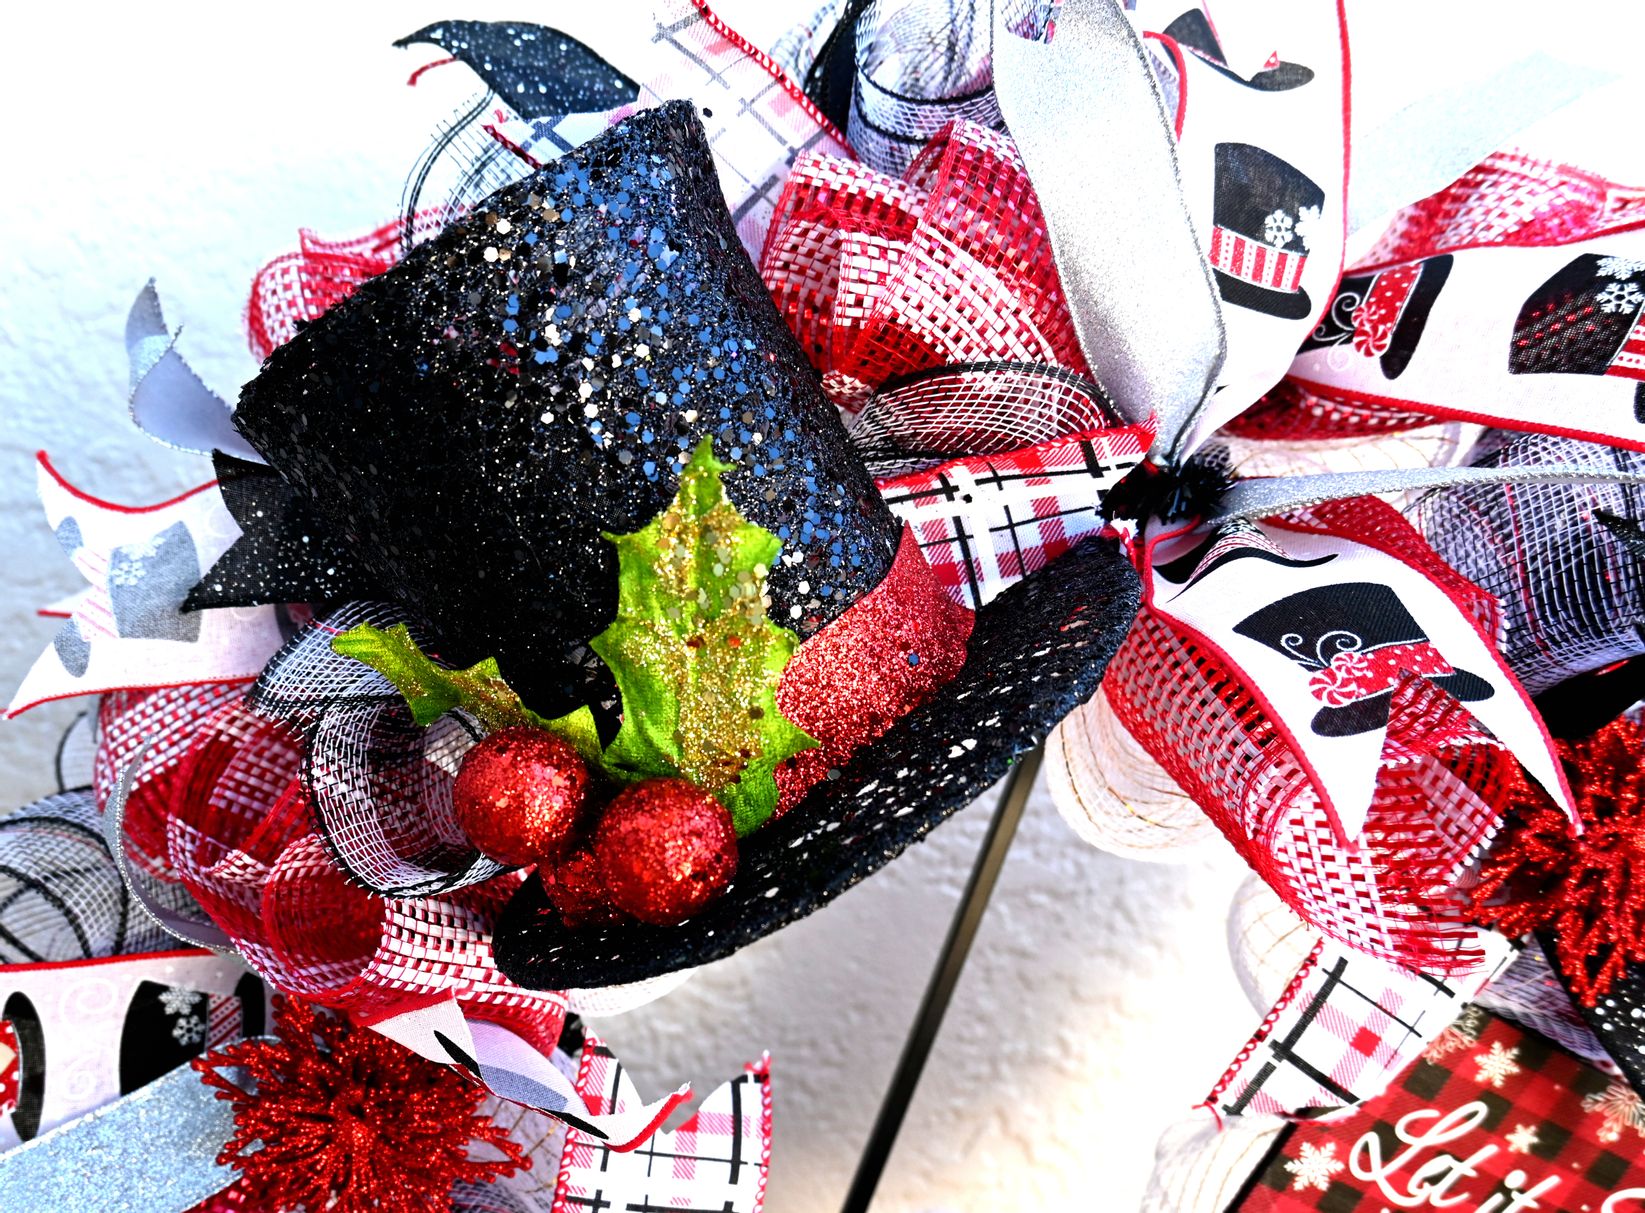 24" Snowman Hat Wreath - Let It Snow Wreath - Christmas Wreath